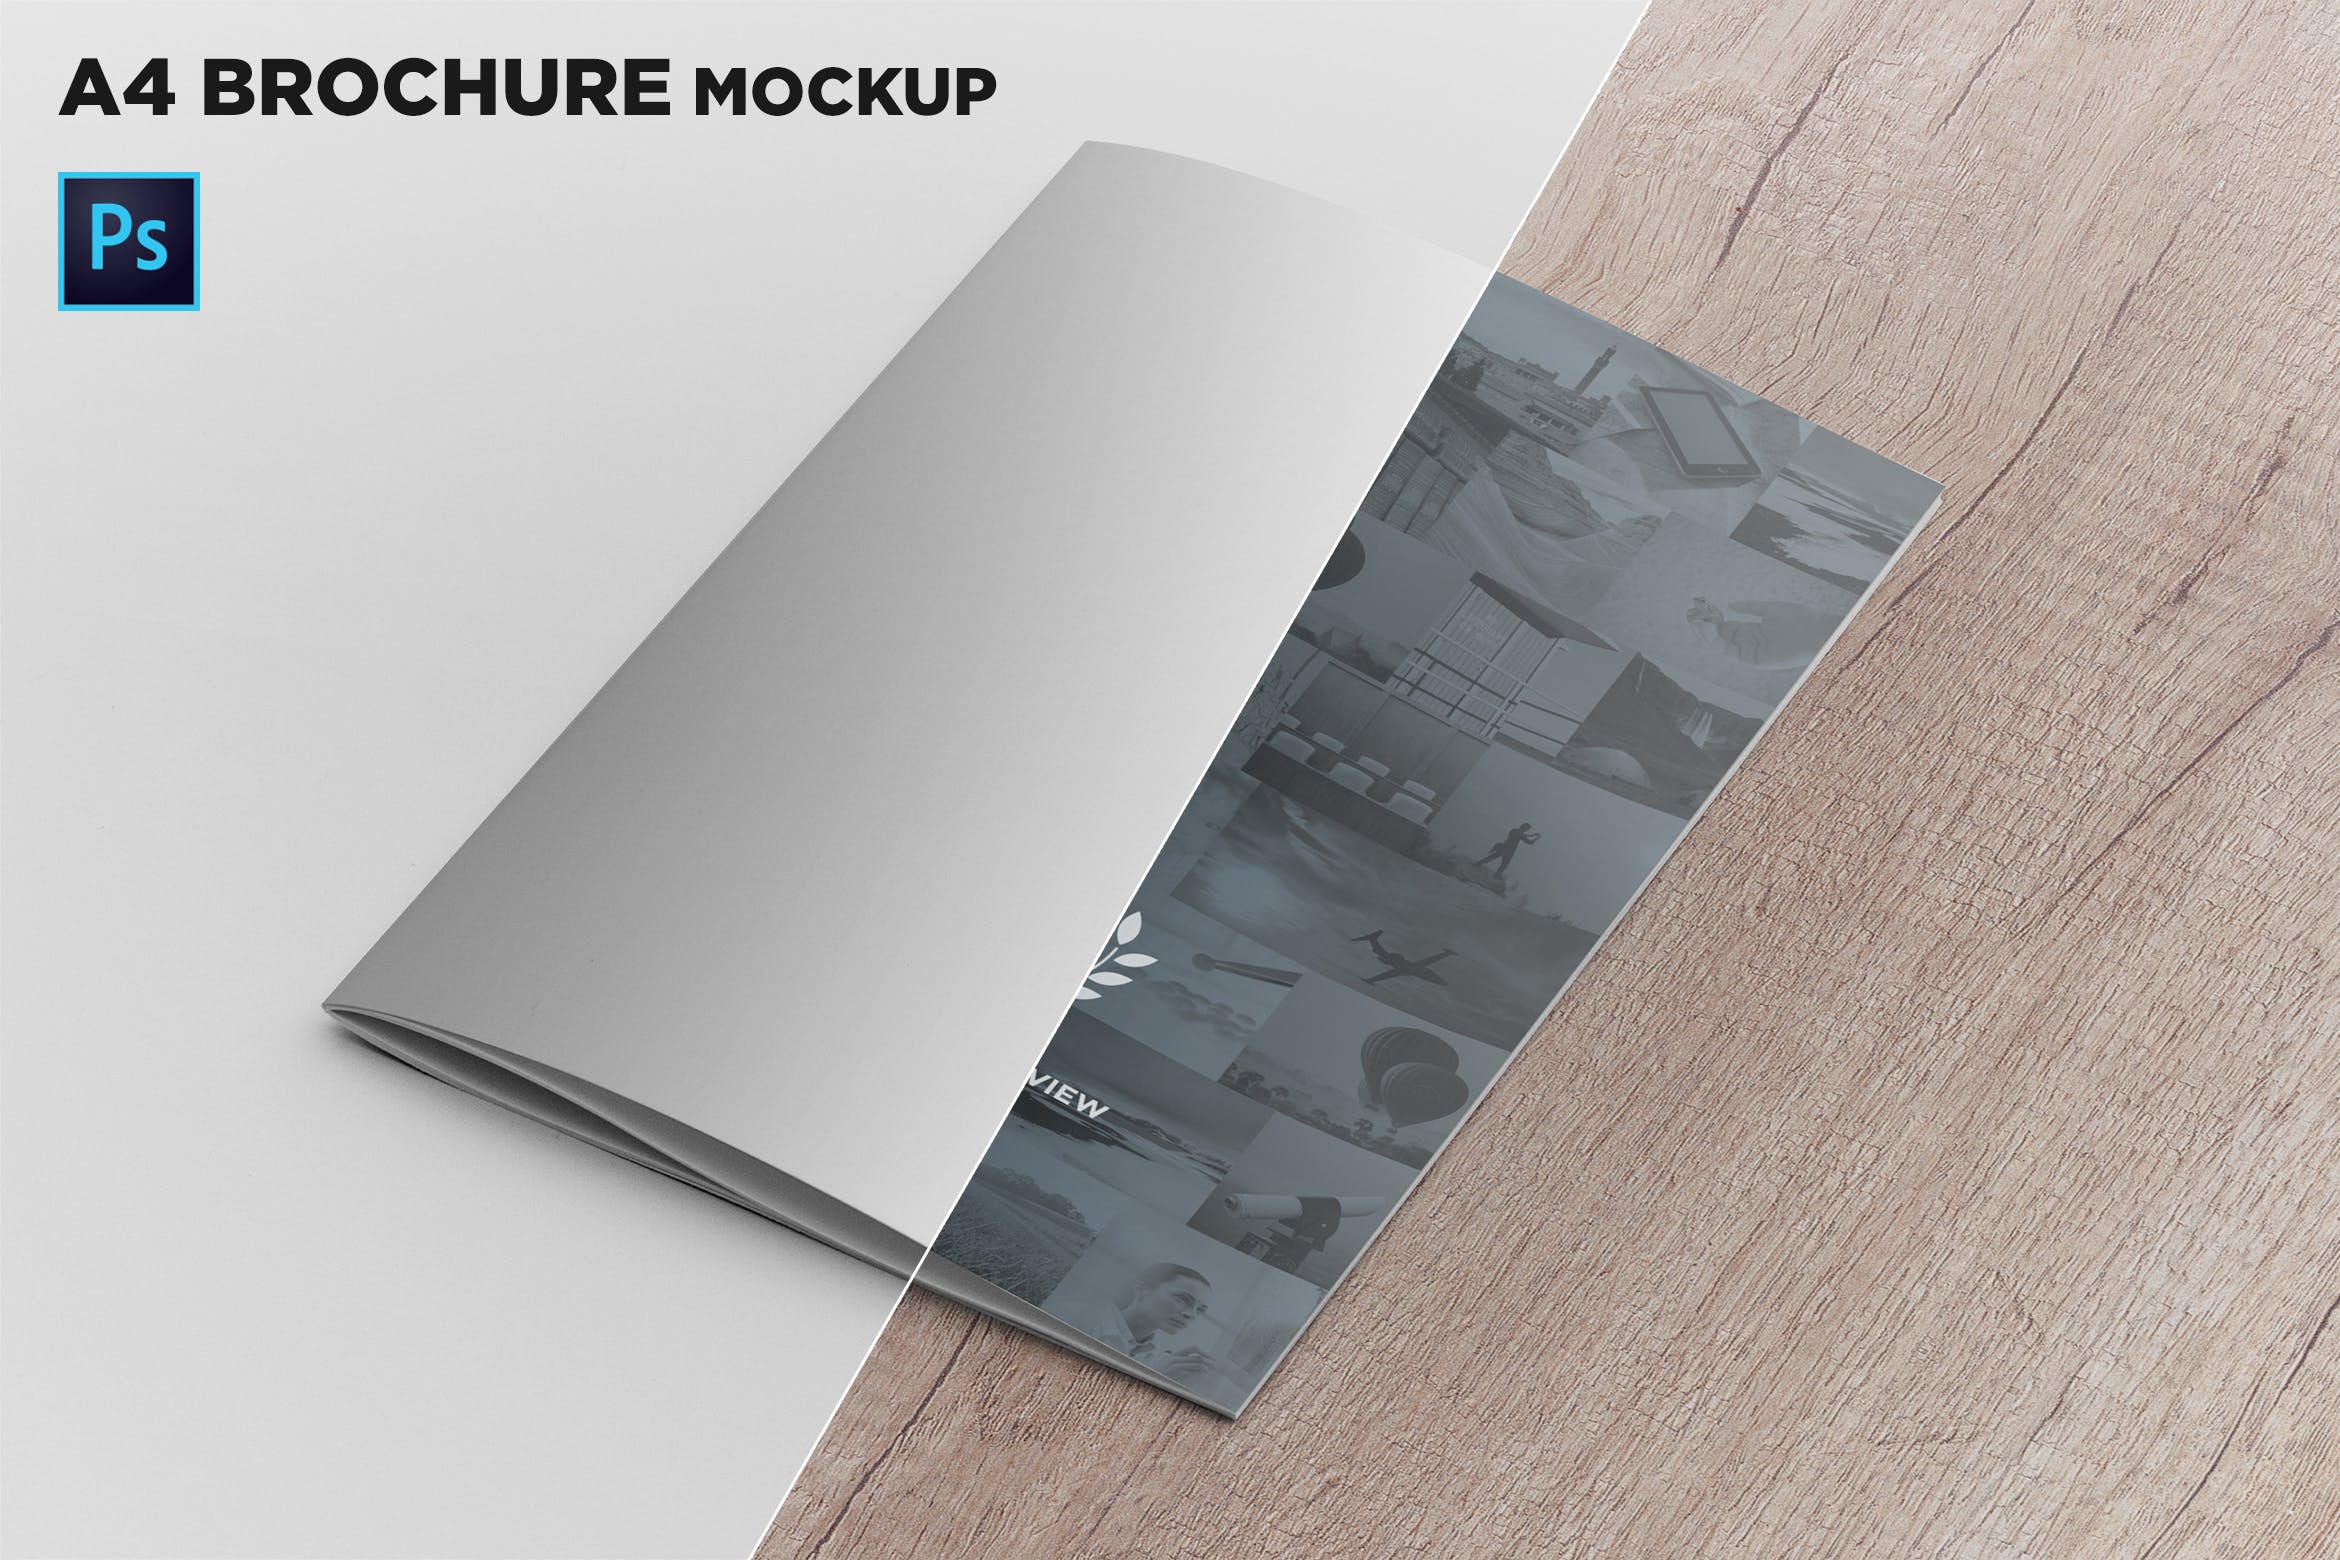 A4尺寸企业/品牌宣传册封面效果图样机普贤居精选模板 A4 Brochure Cover Mockup Perspective View插图